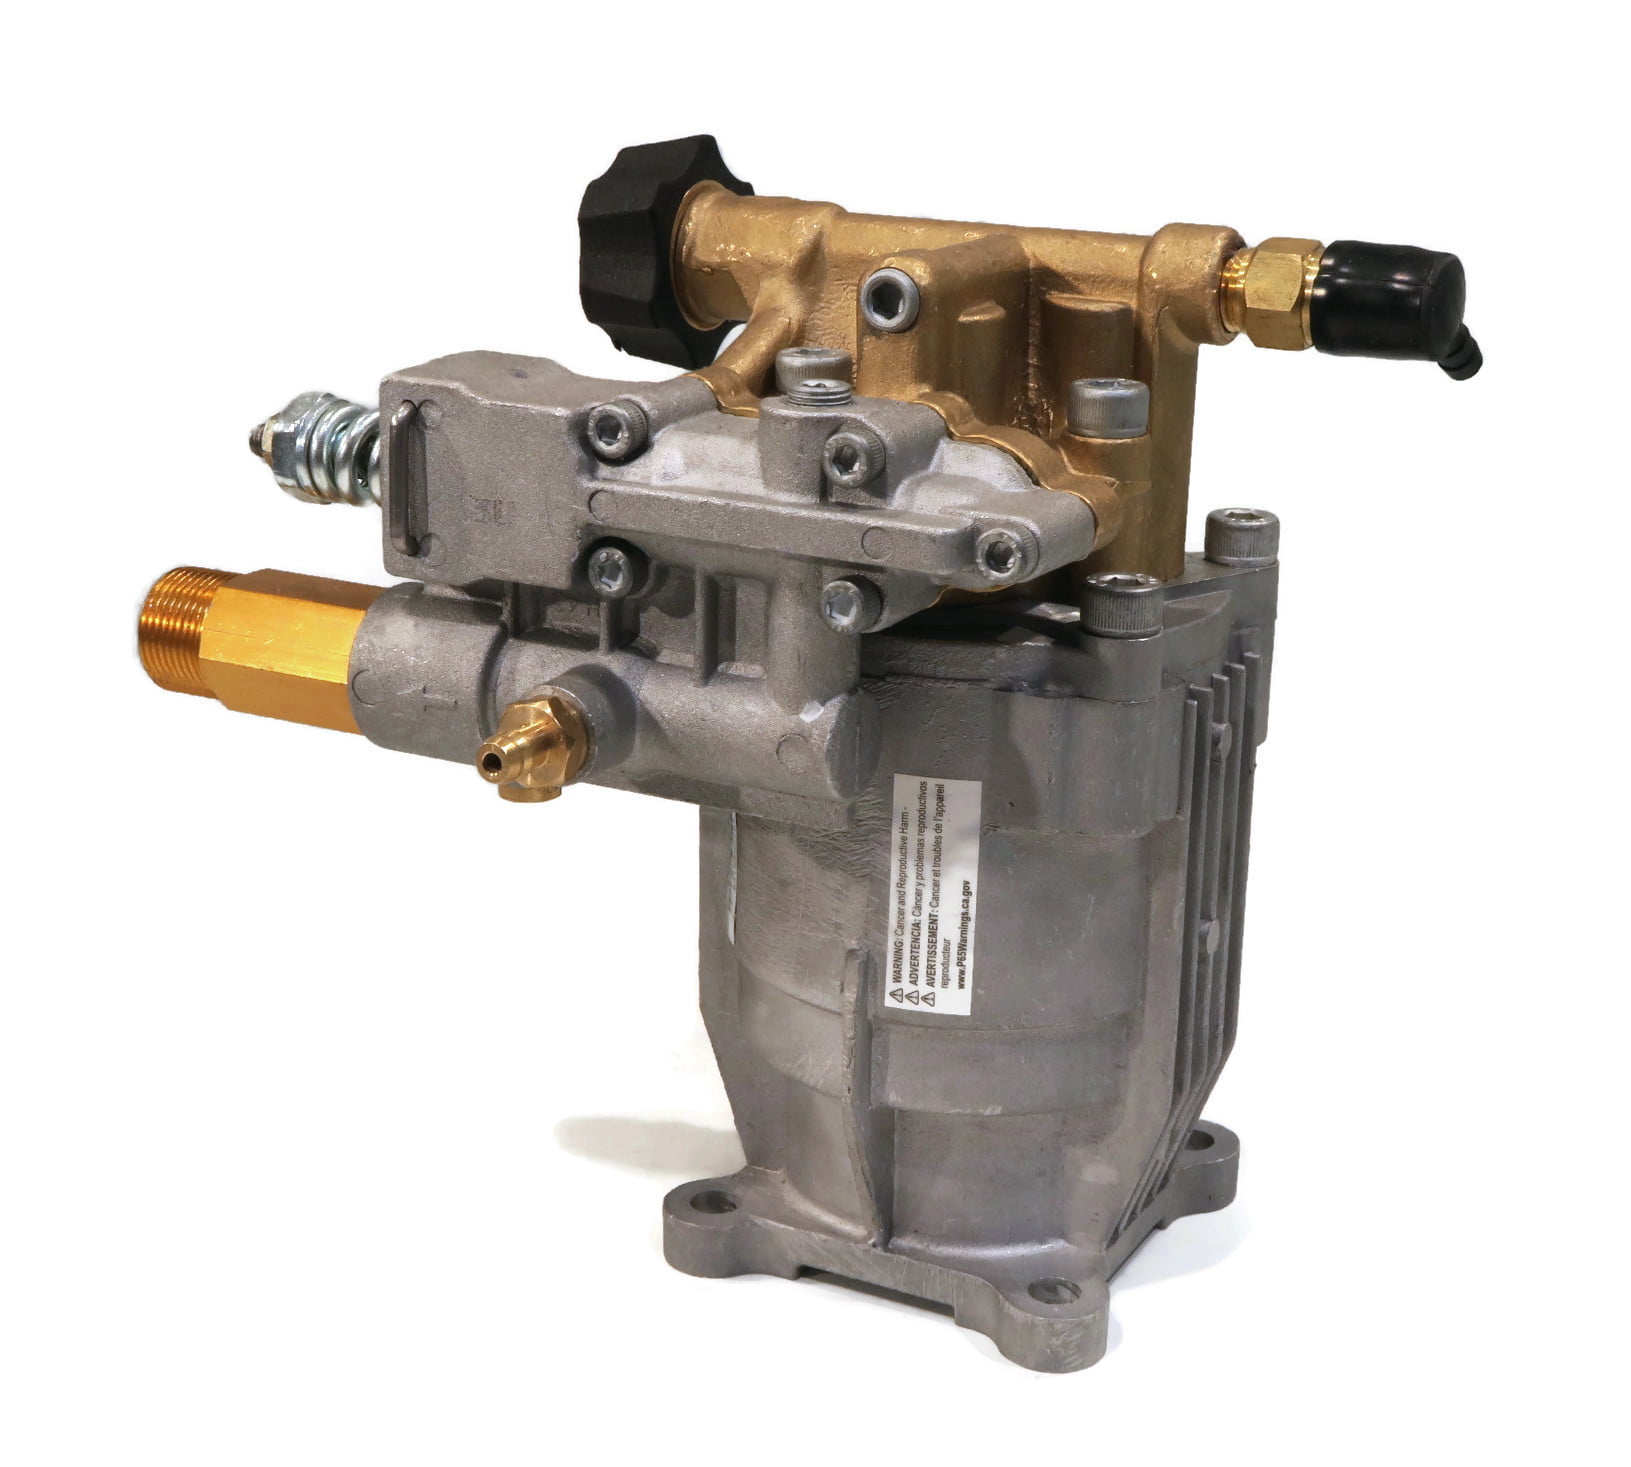 1901-0 1676-0 1676-1 1901 Generac Pressure Washer Pump & Spray Kit for Generac 1676 